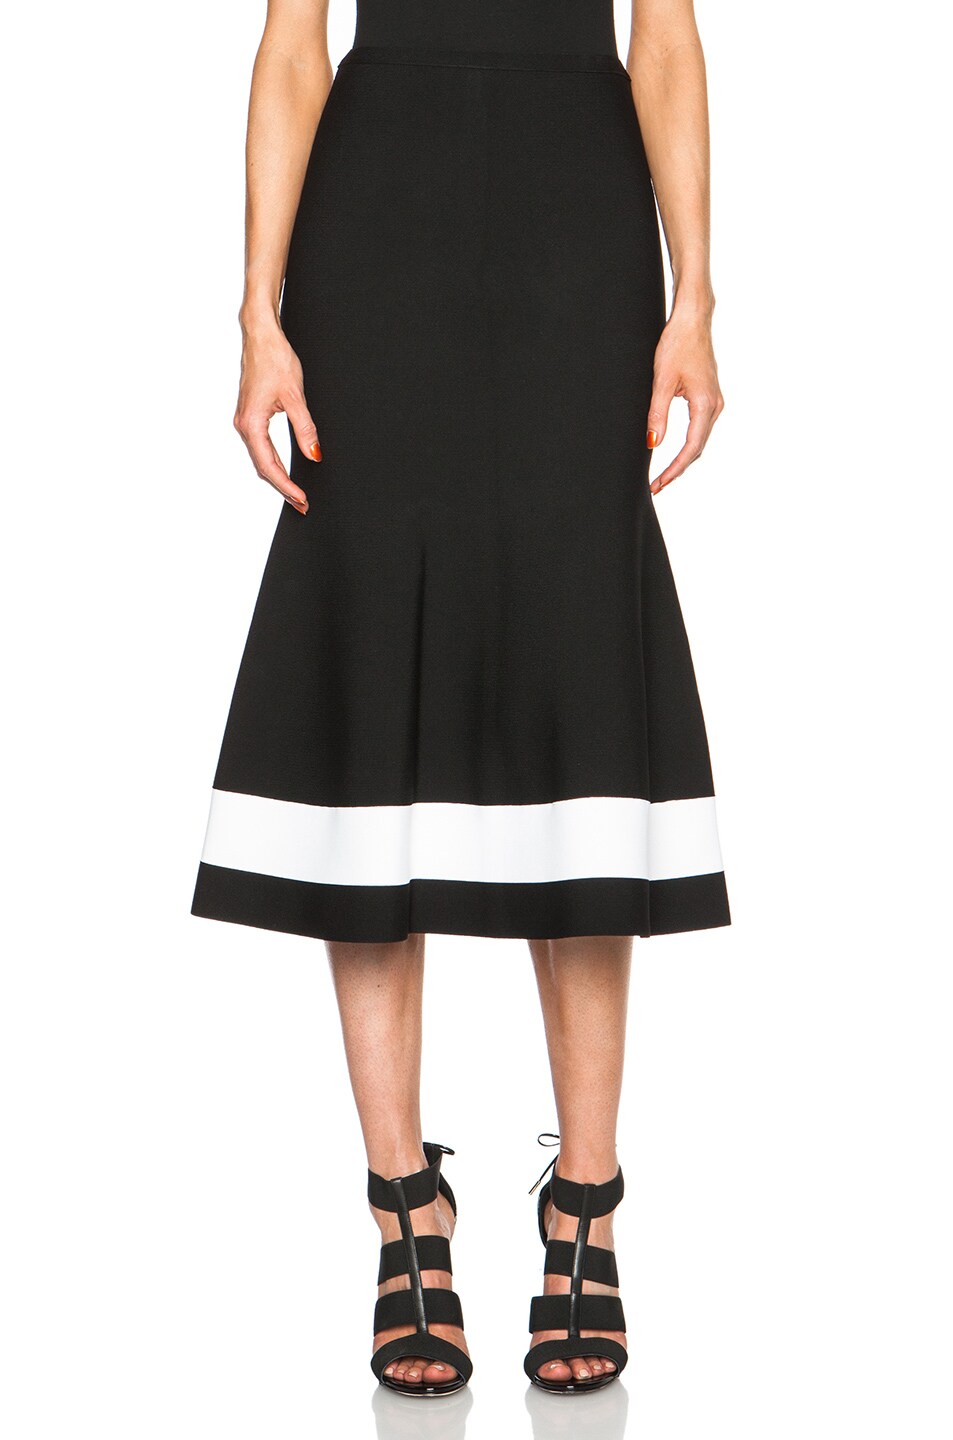 Image 1 of Victoria Beckham Interlock Skirt in Black & White Stripe